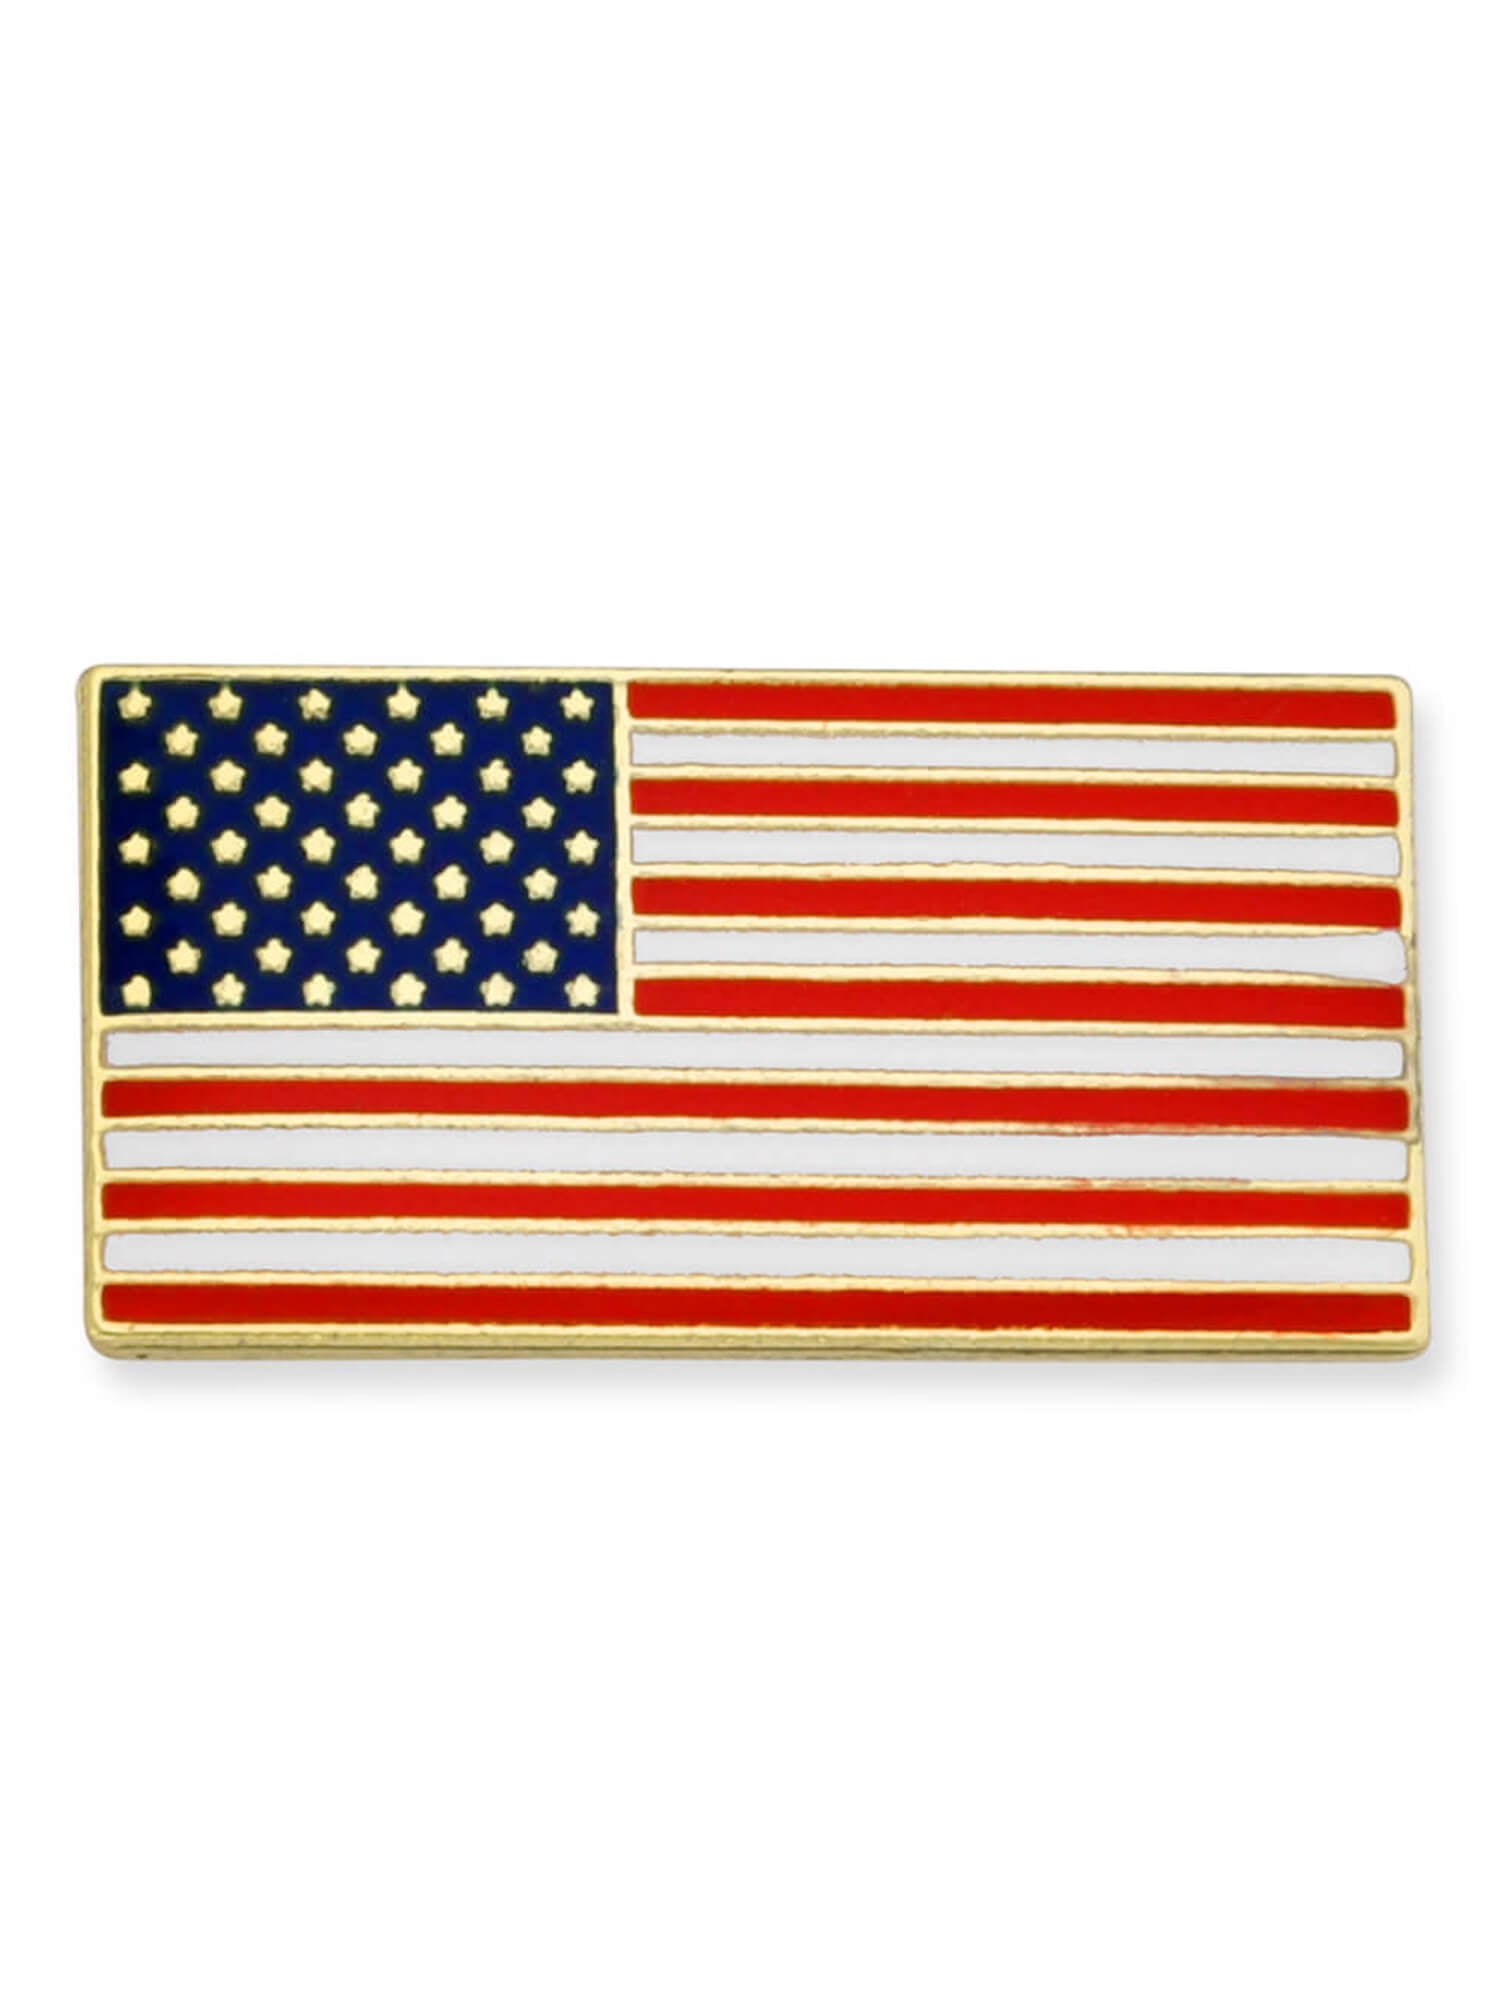 UNITED STATES WAVY FLAG USA LAPEL PIN BADGE 1 INCH 